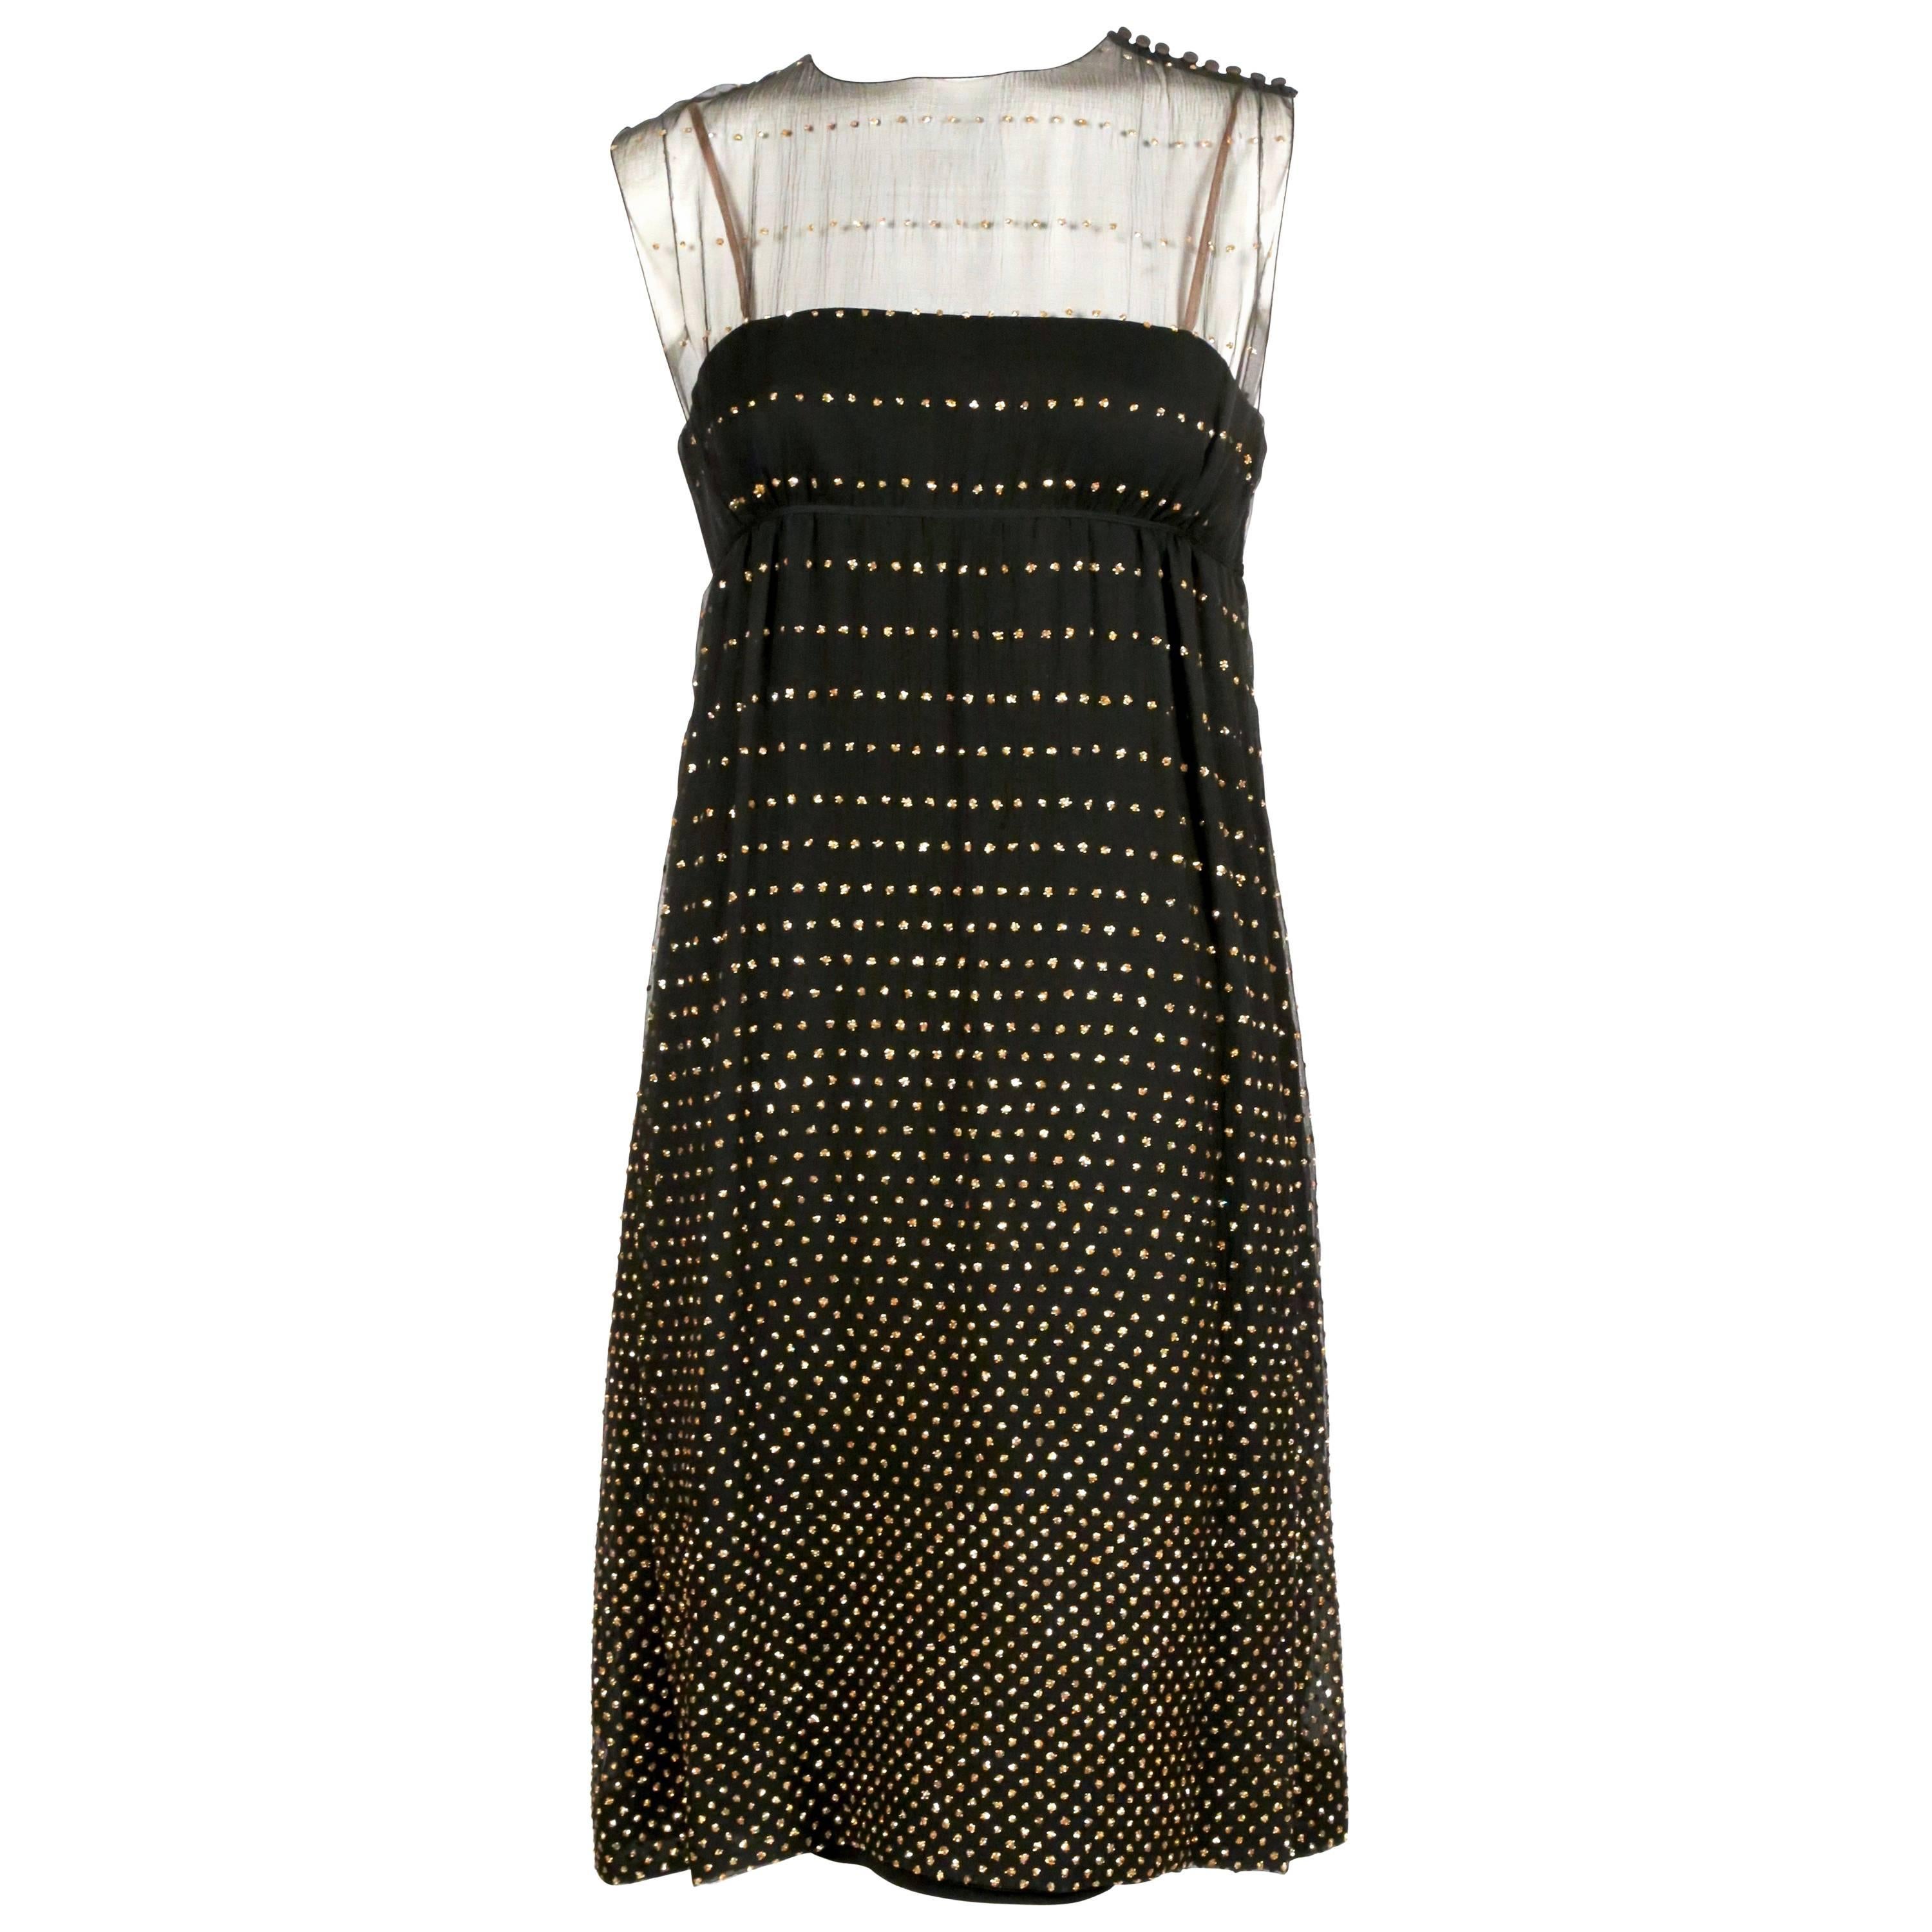 1960's PAULINE TRIGERE black silk dress with glitter accents